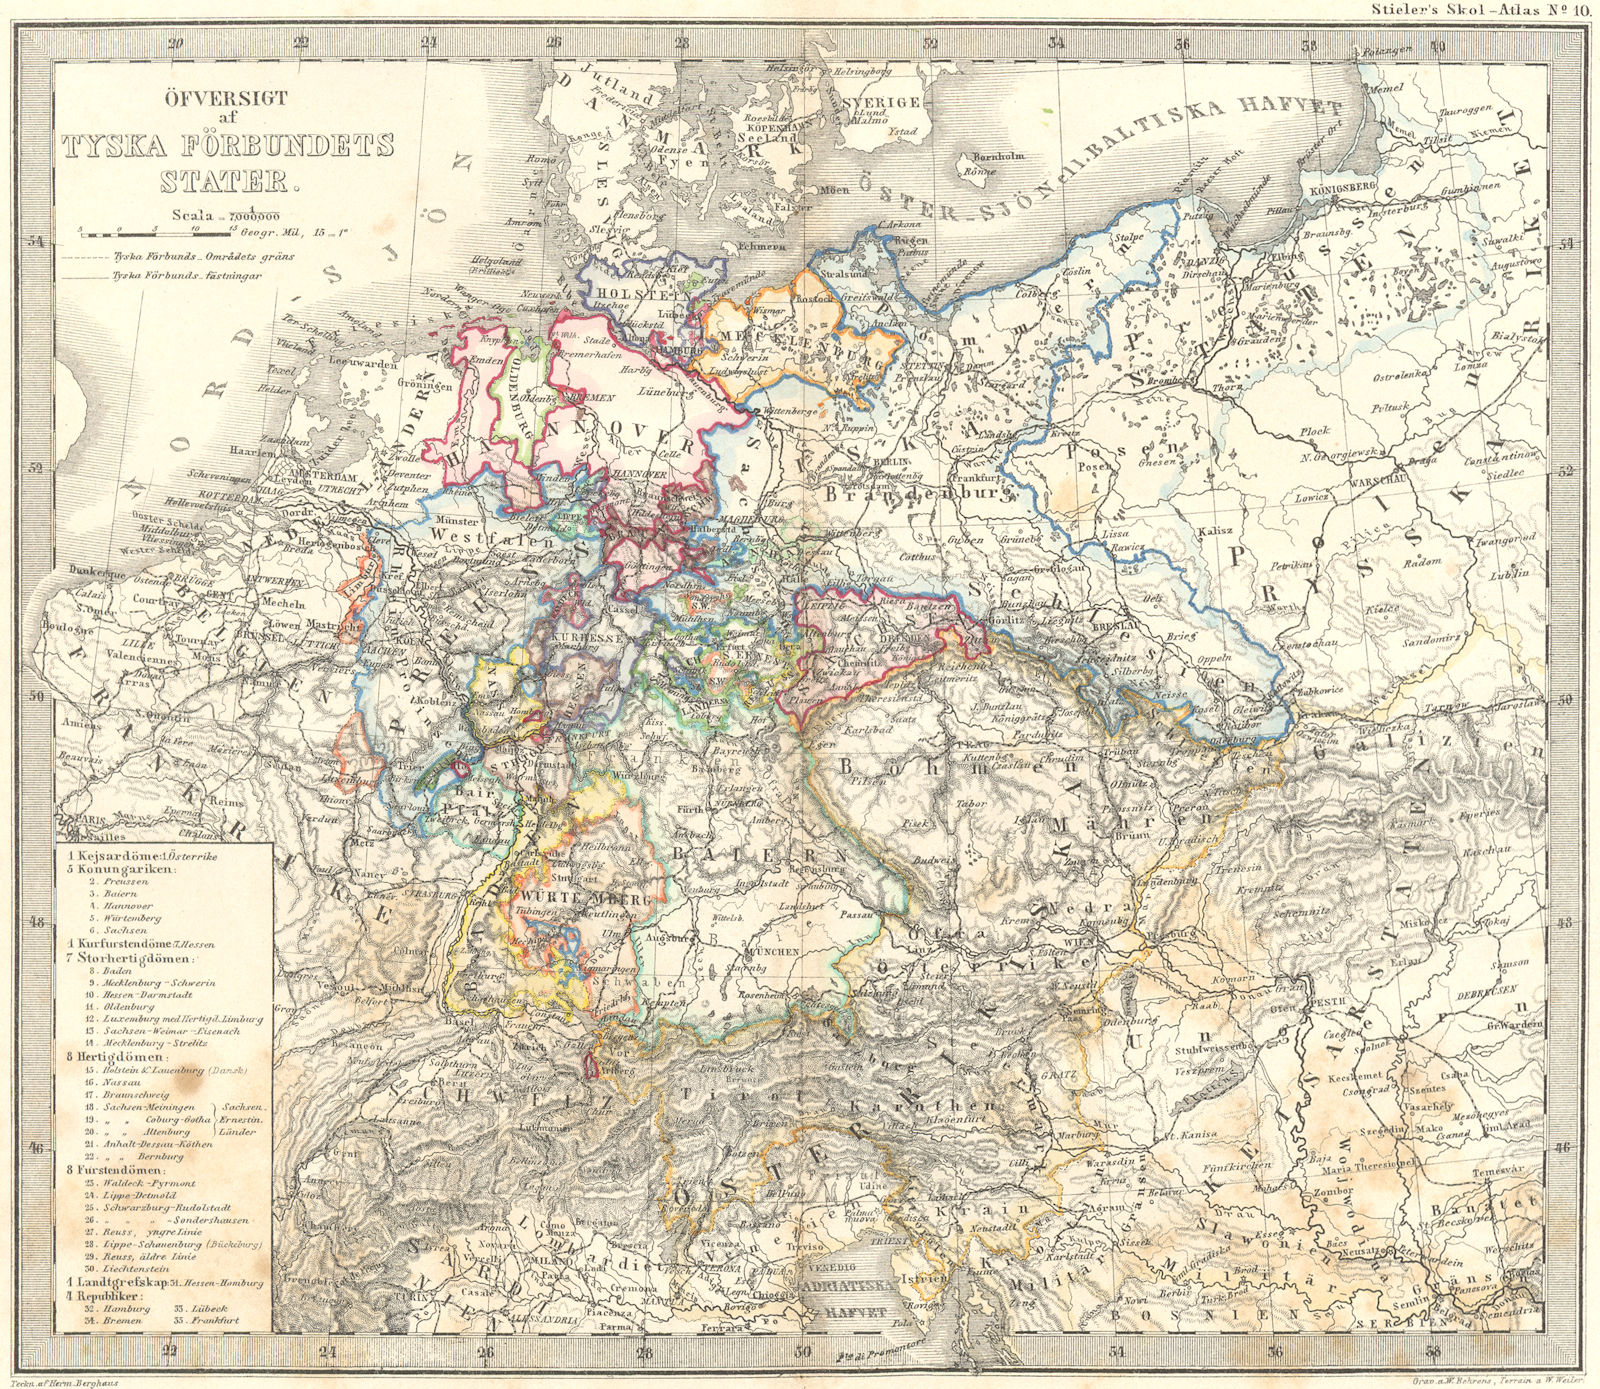 Associate Product GERMANY. Tyska Forbundets Stater. Stieler 1861 old antique map plan chart